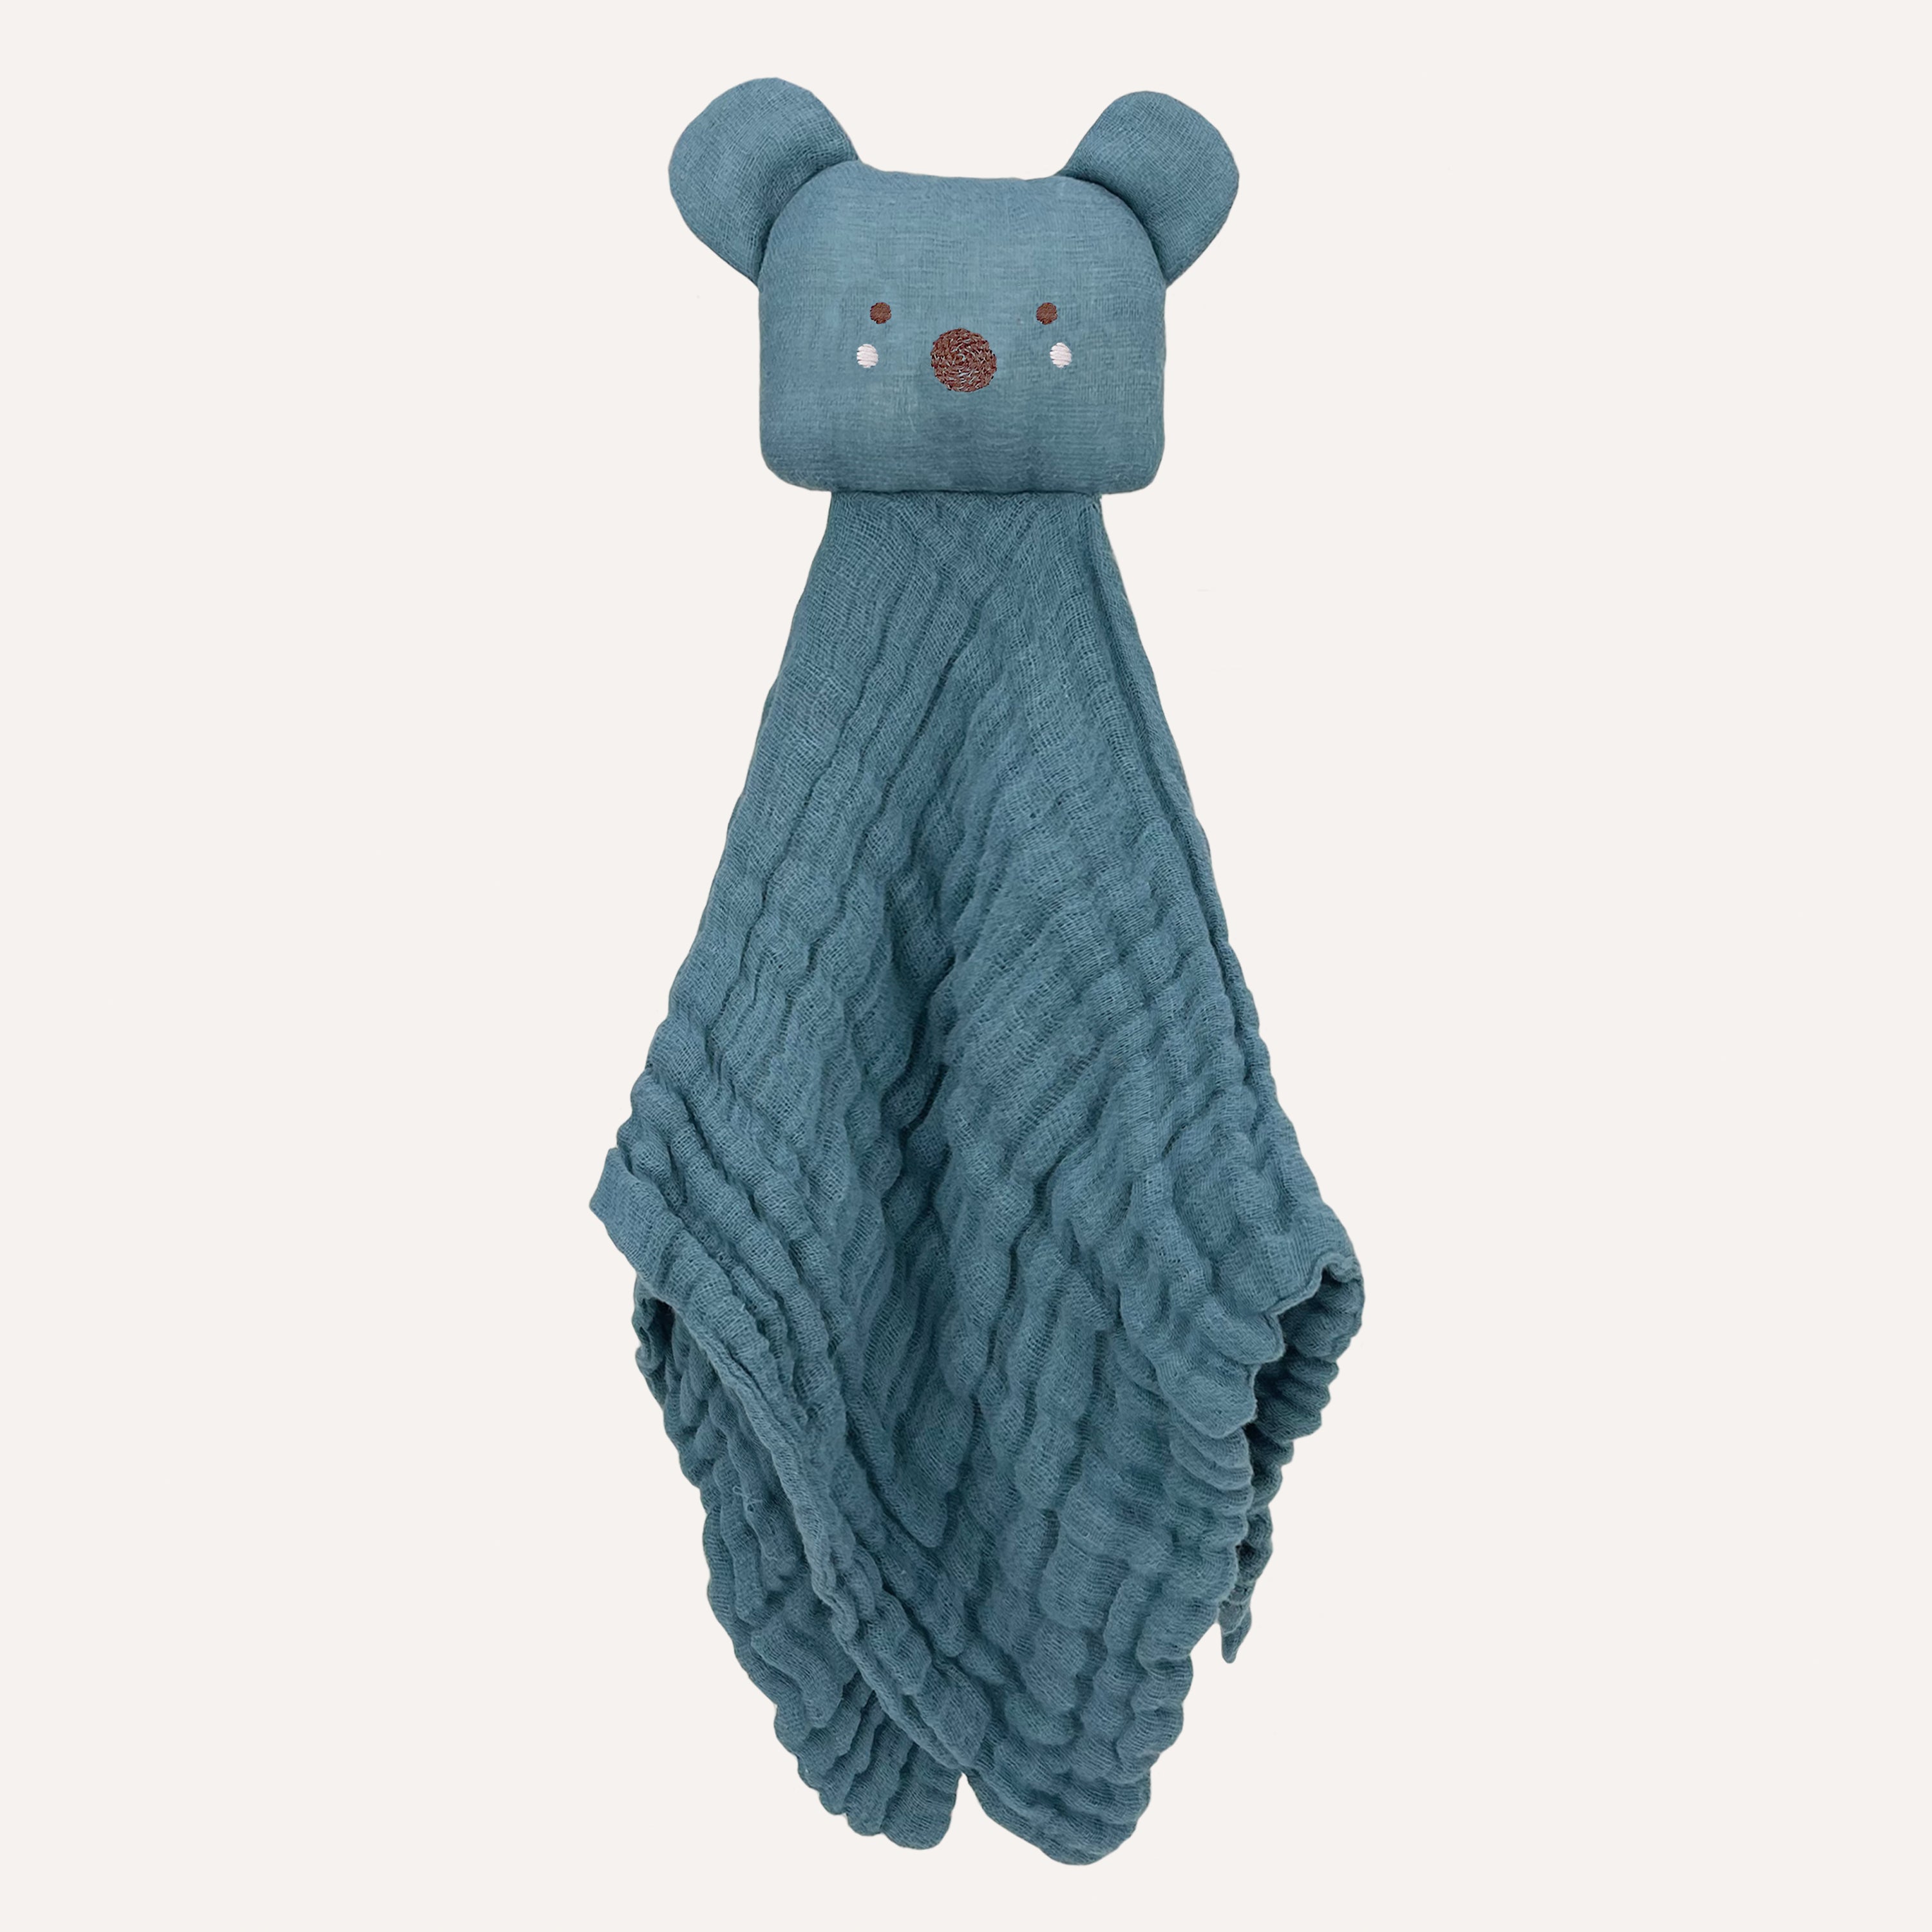 Abracadabra Organics Collectible Security Blanket With Cuddle Toy - Koala Bear